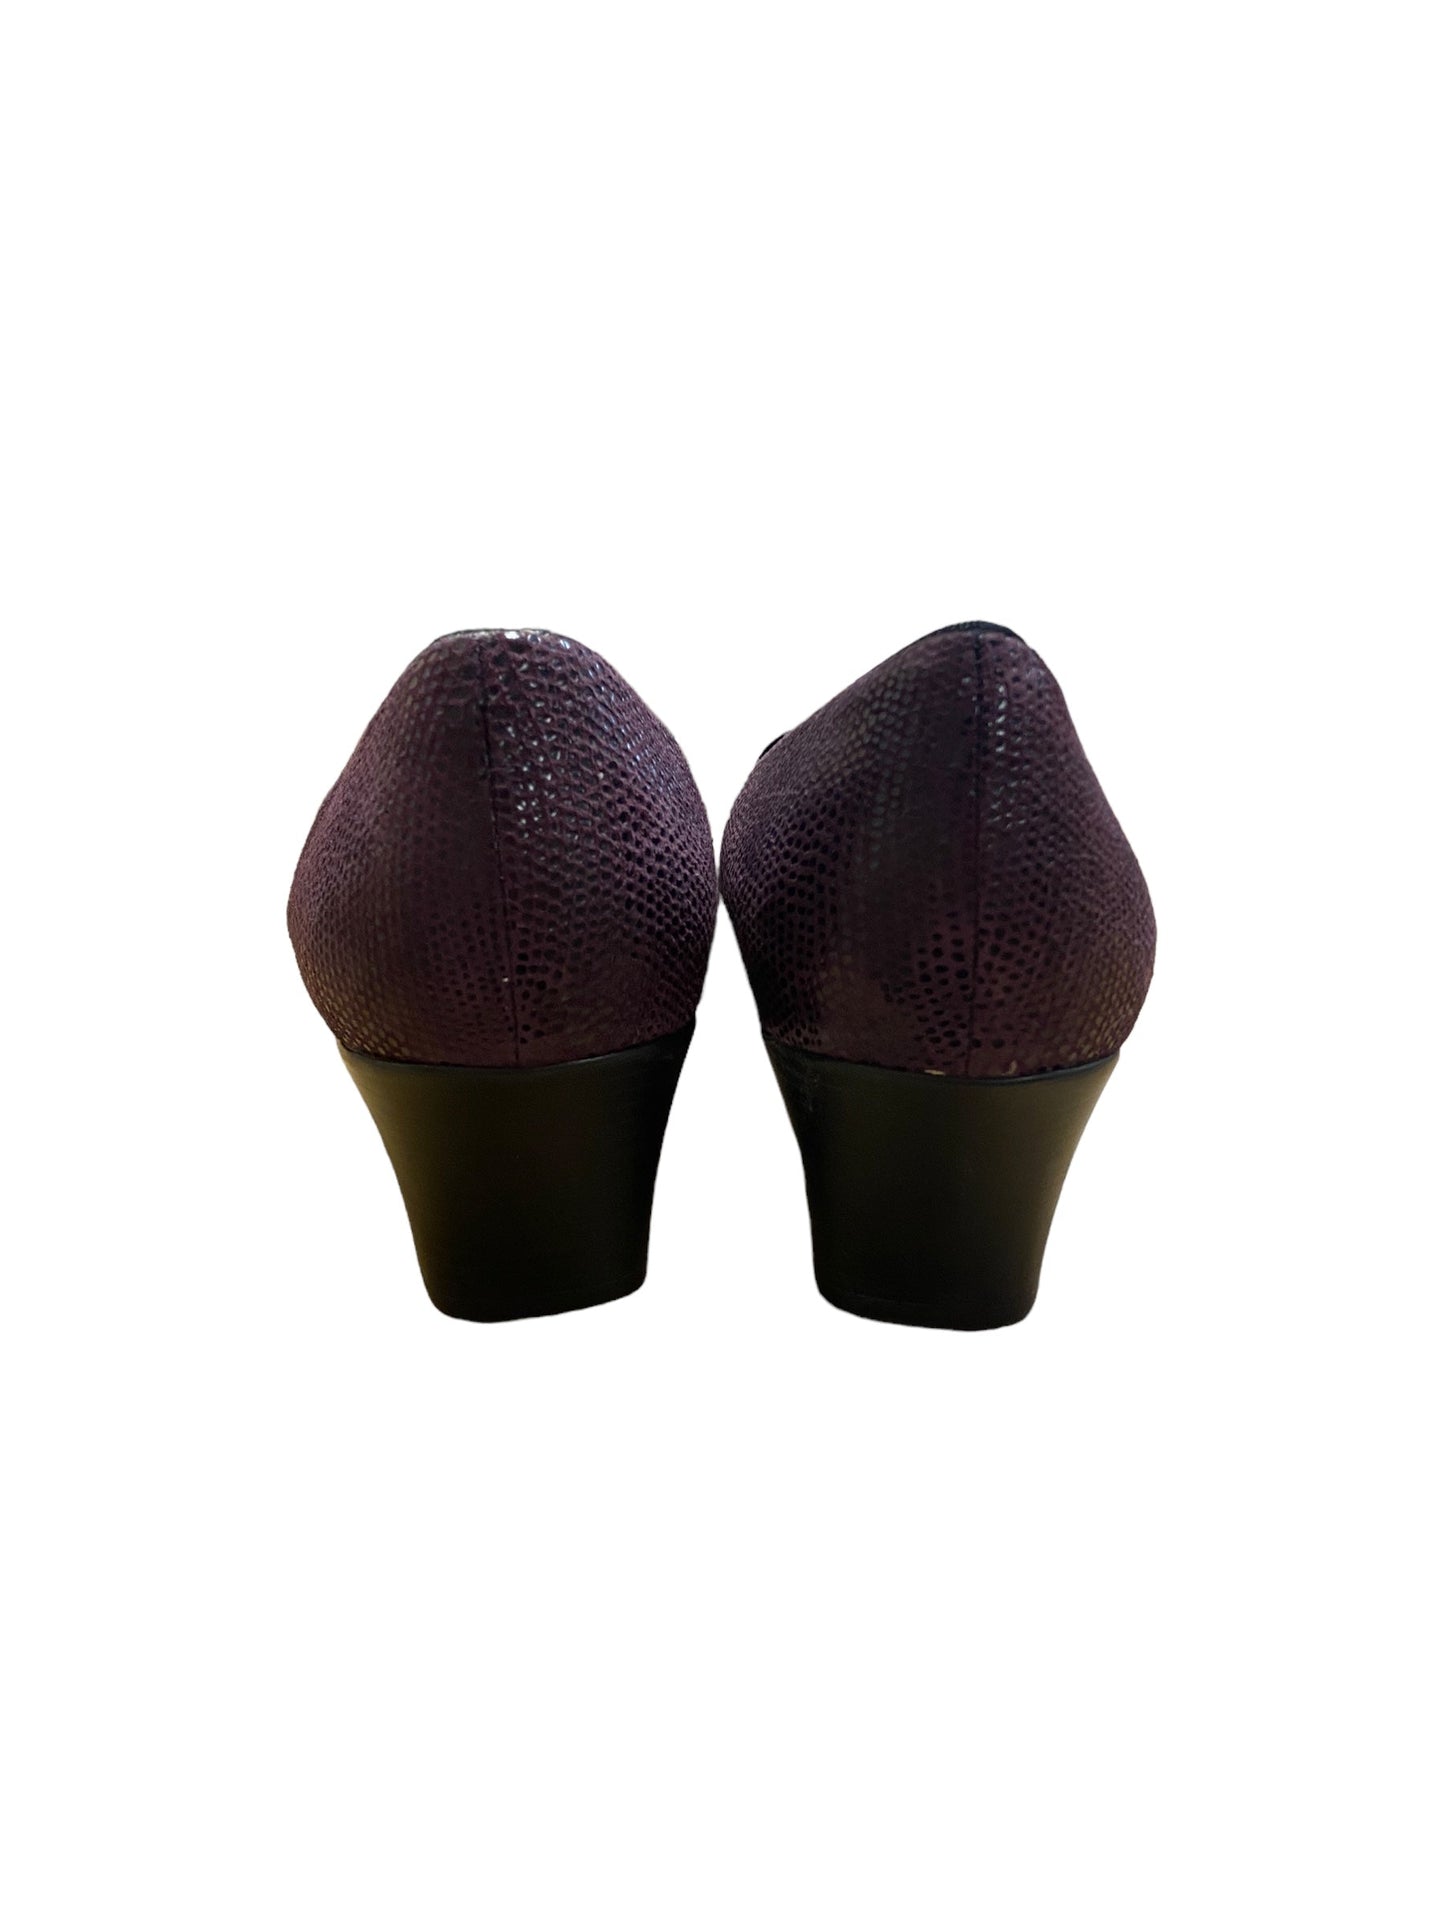 Purple Shoes Heels Block Clothes Mentor, Size 8